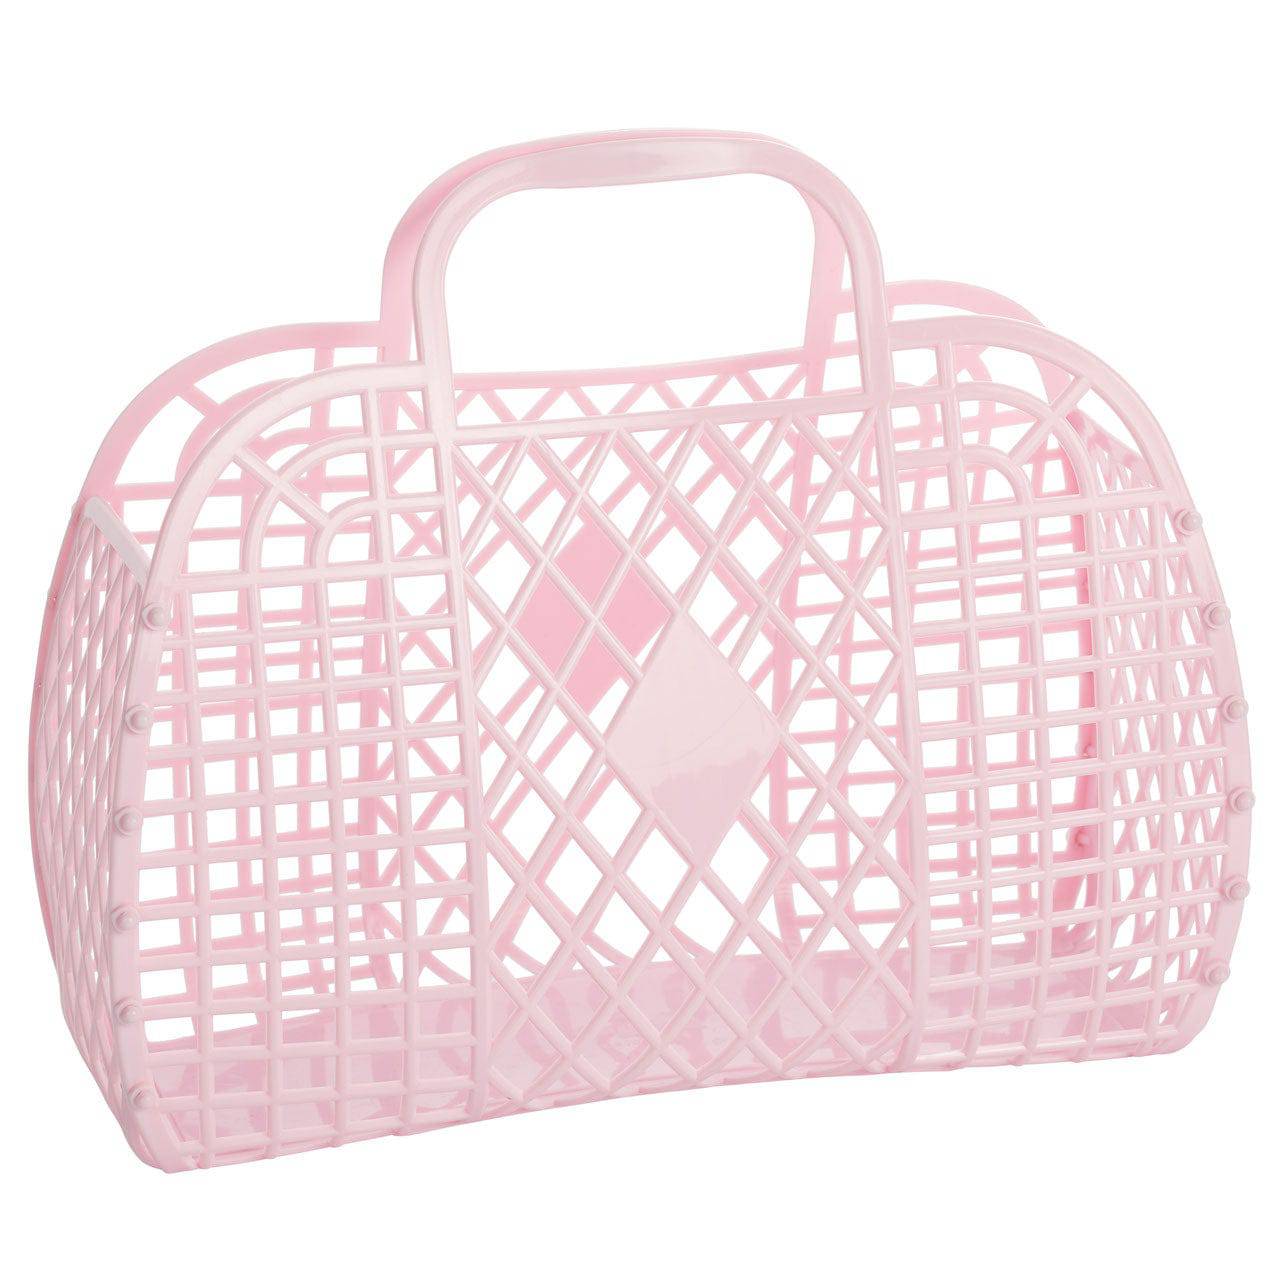 Sunjellies - retro basket - large - pink - Hyggekids